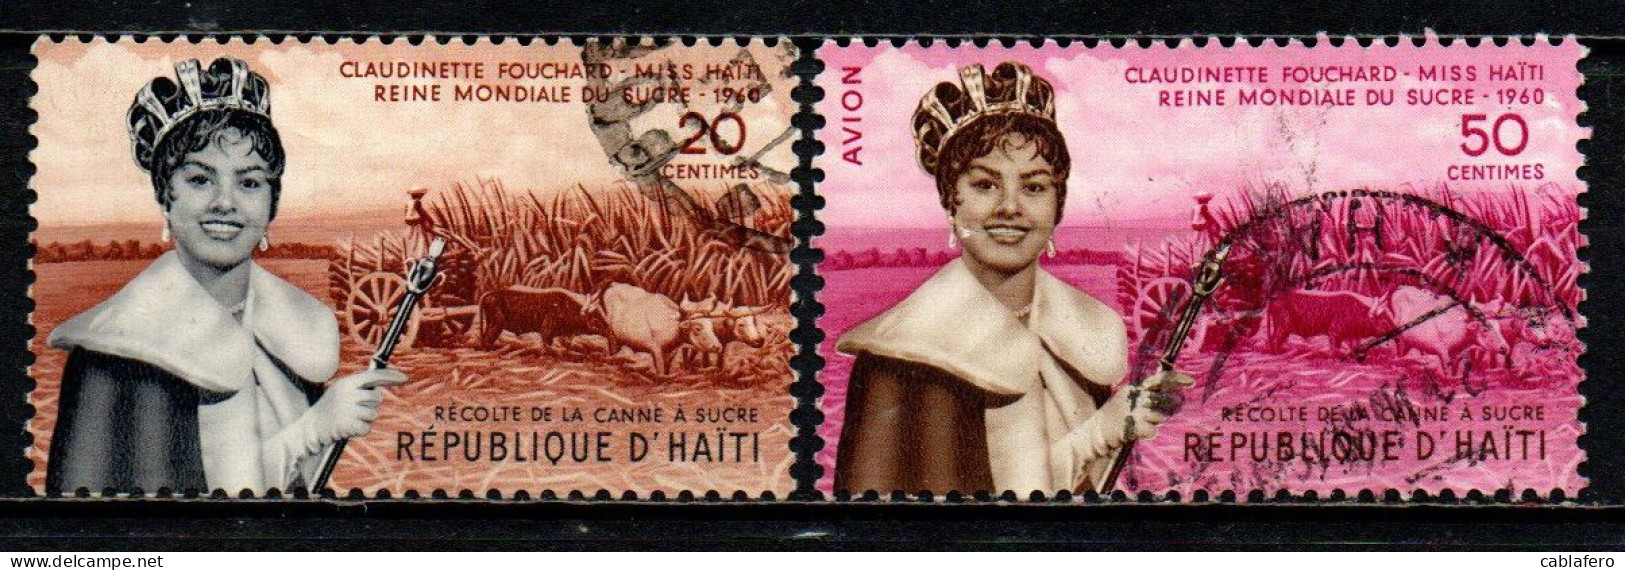 HAITI - 1960 - Claudinette Fouchard, Miss Haiti - Sugar Queen - USATI - Haiti